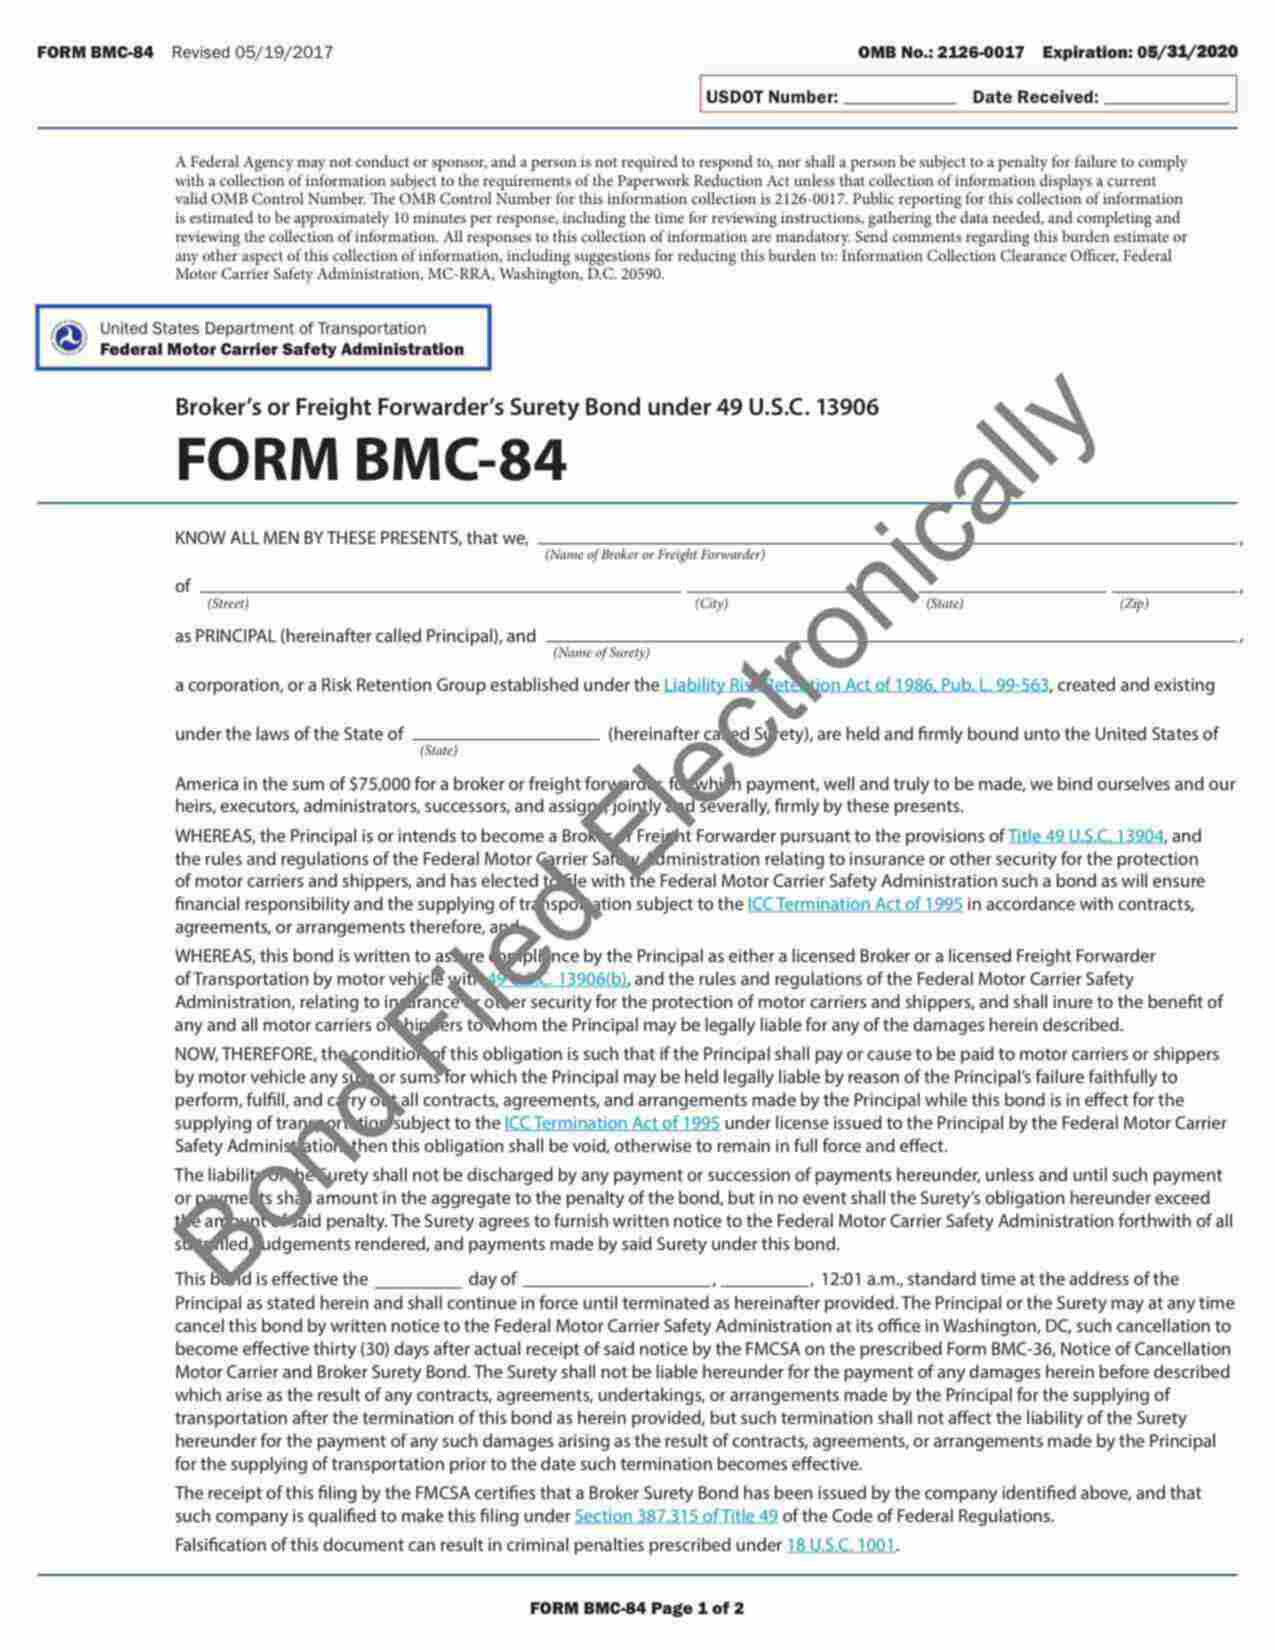 Virginia Property Broker or Freight Forwarder BMC-84 (ICC Broker) Bond Form